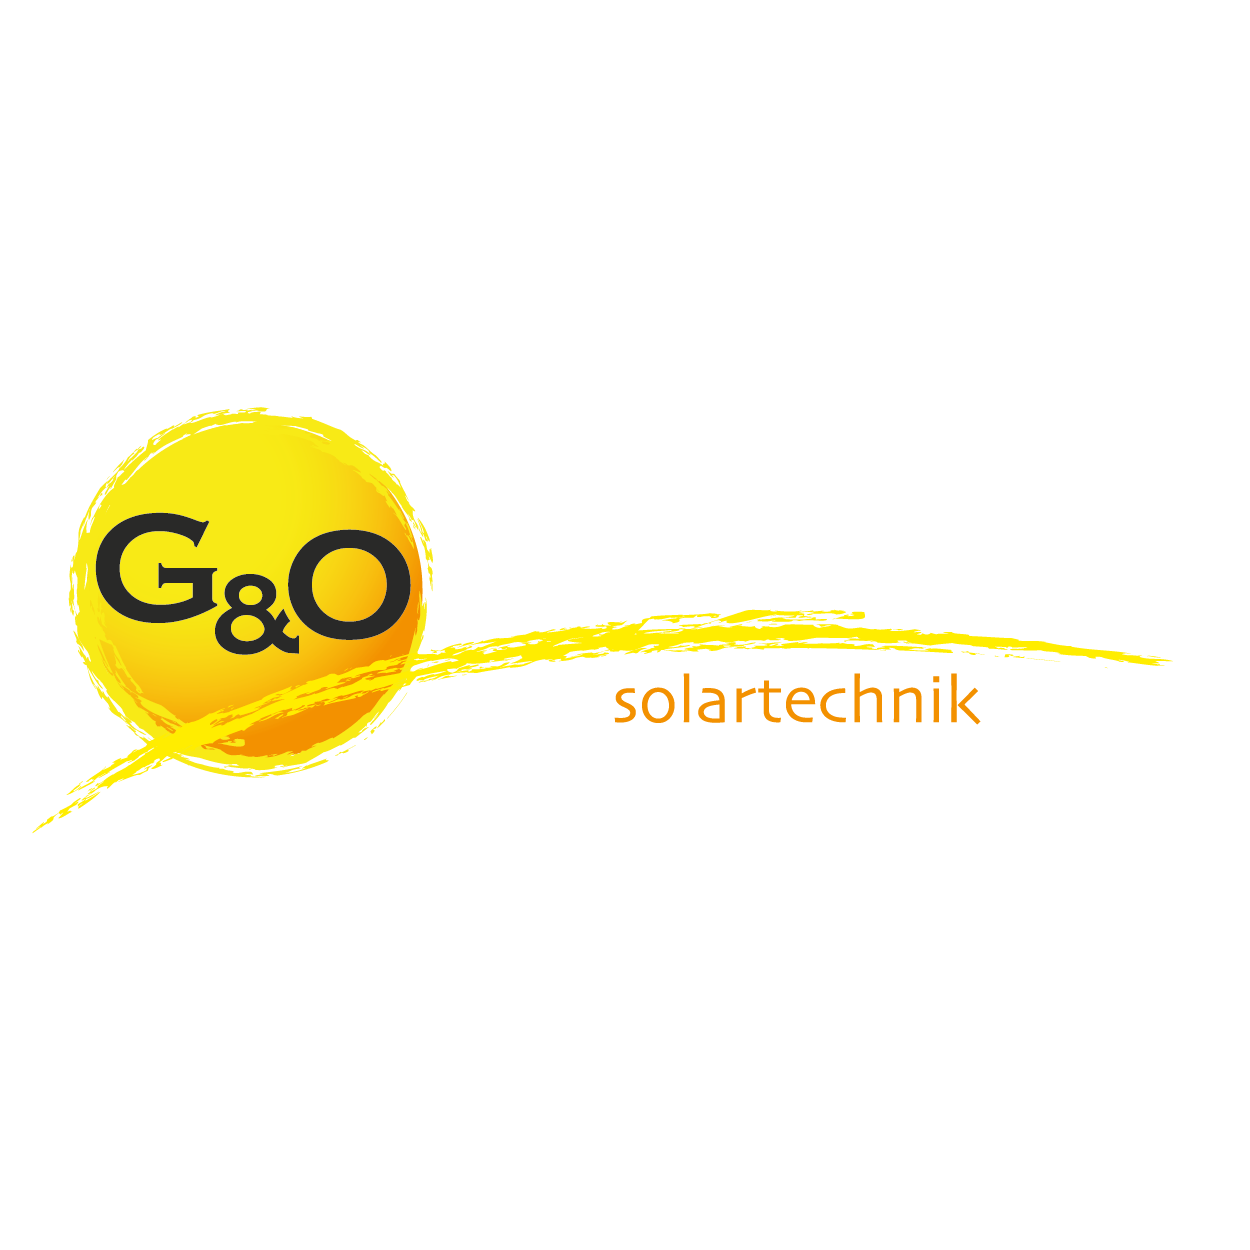 G&O sunsolutions GmbH